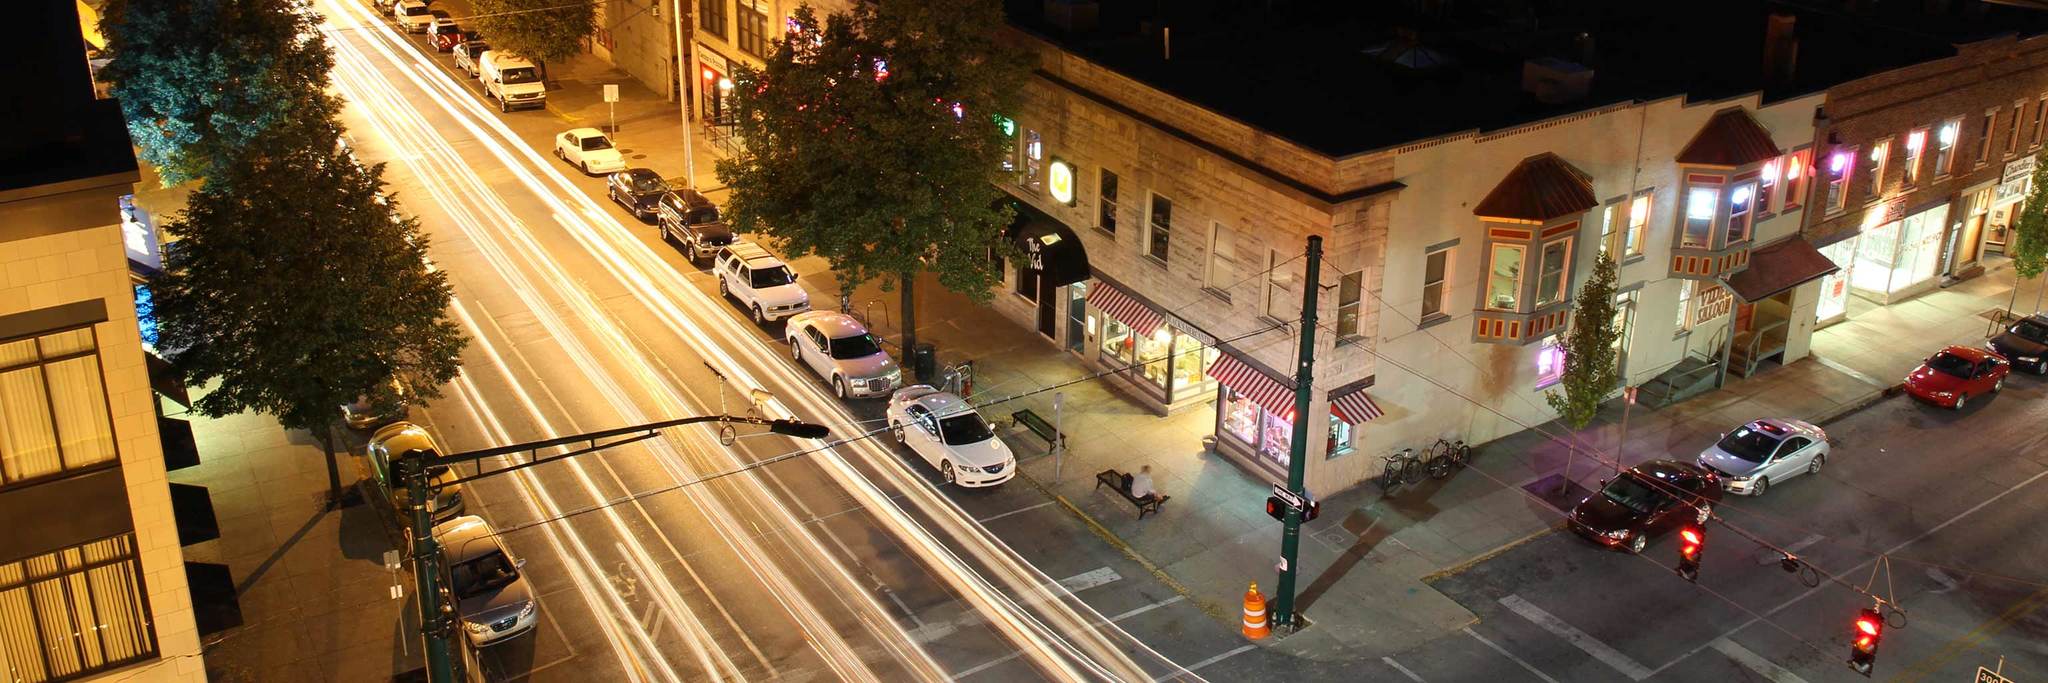 Downtown Bloomington street at night